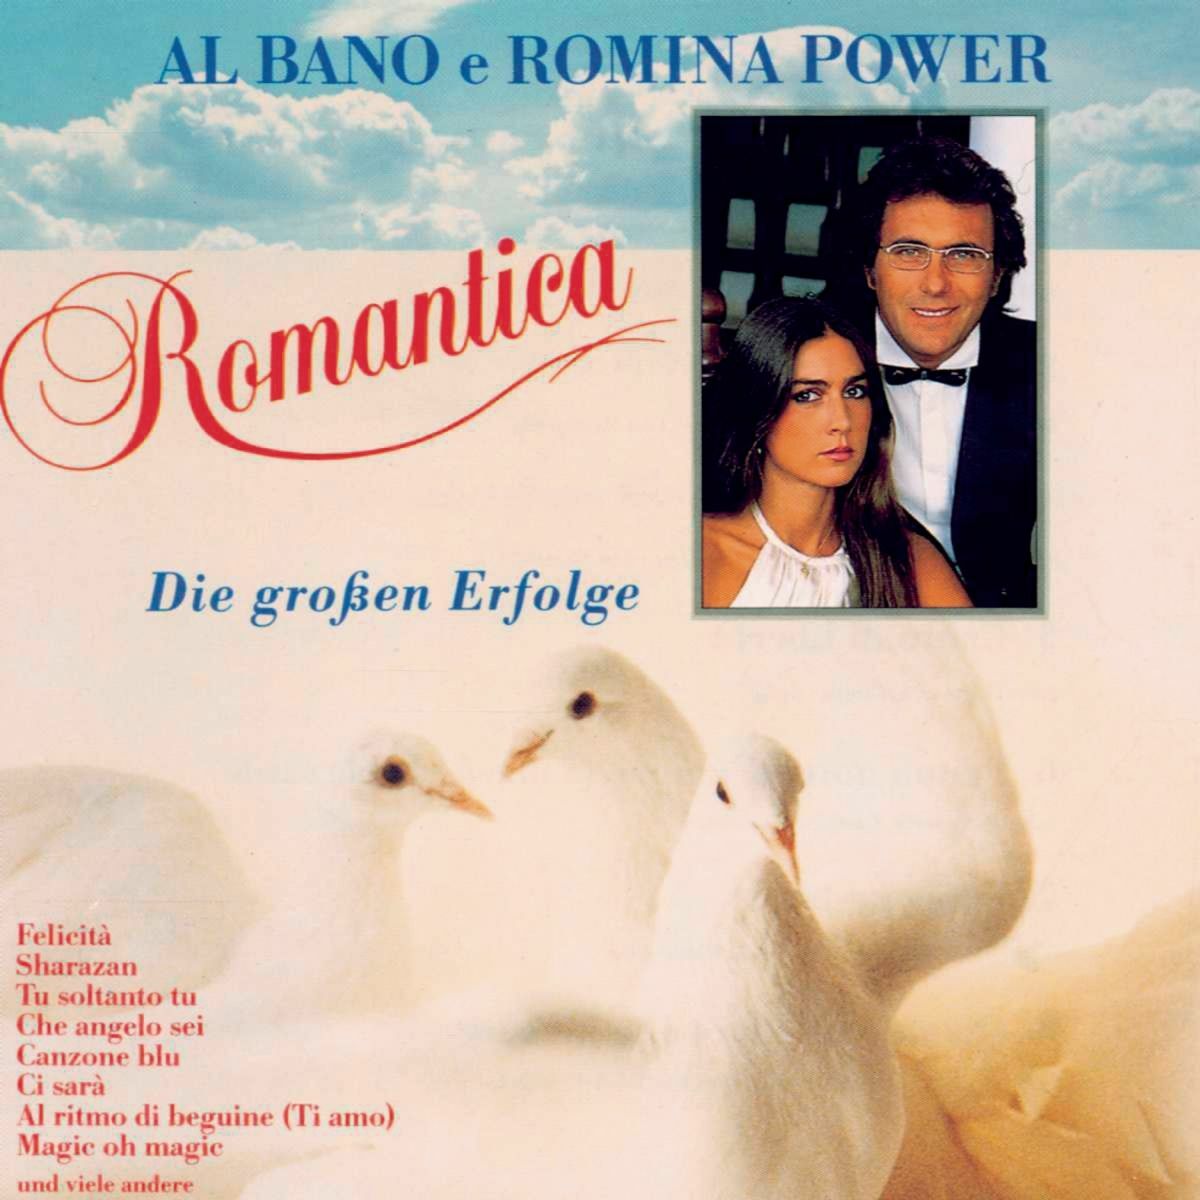 Al Bano u0026 Romina Power: albums